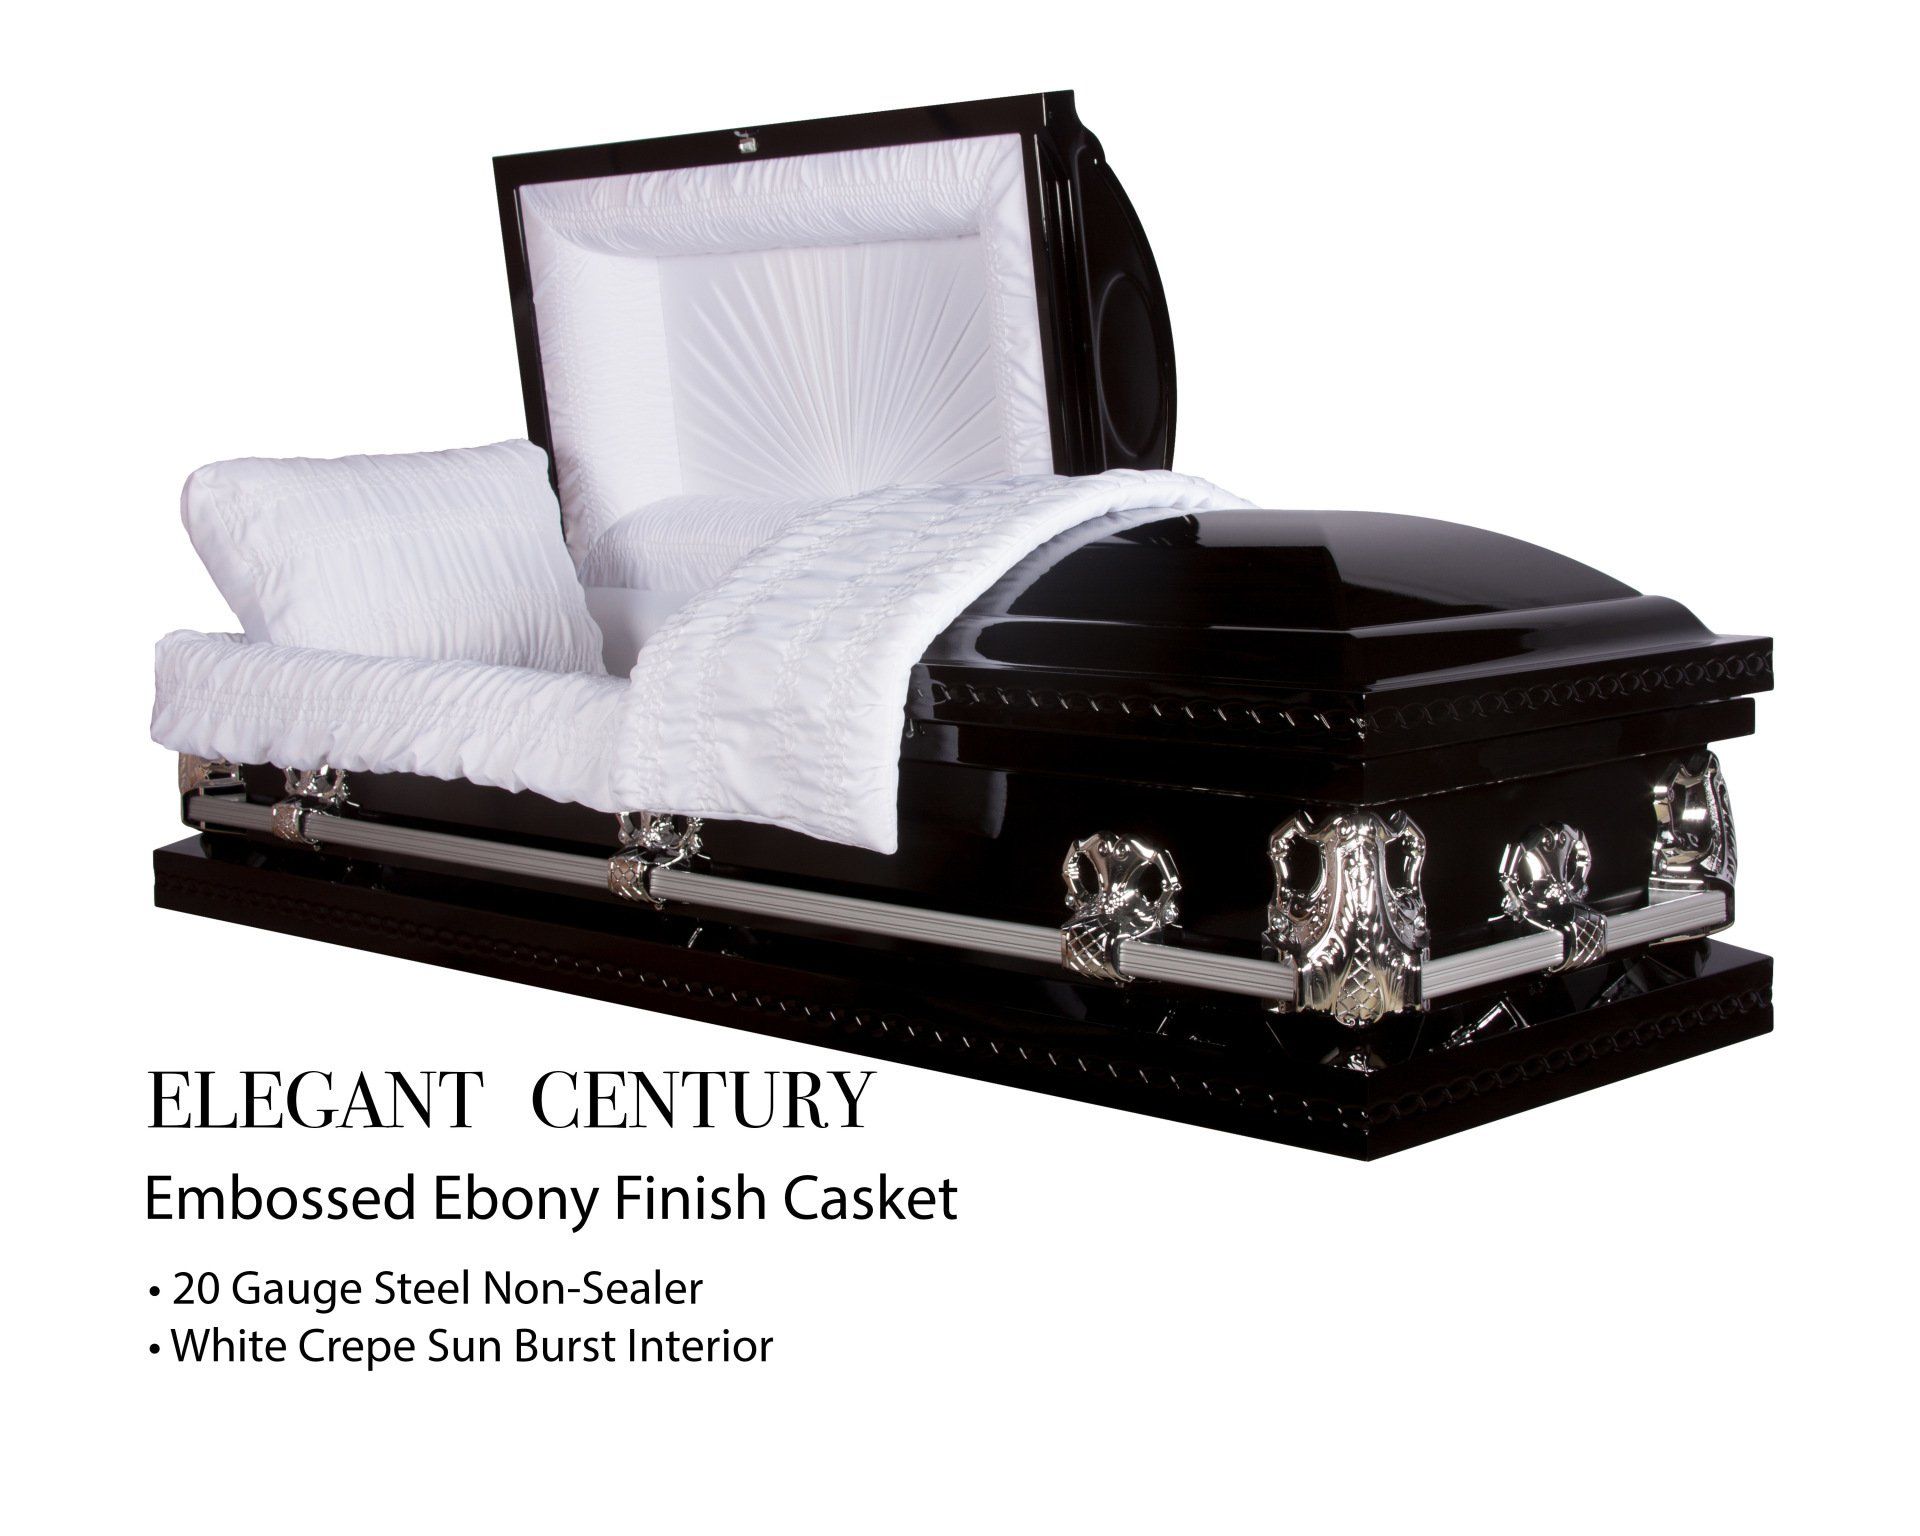 Lic Cremation Service caskets